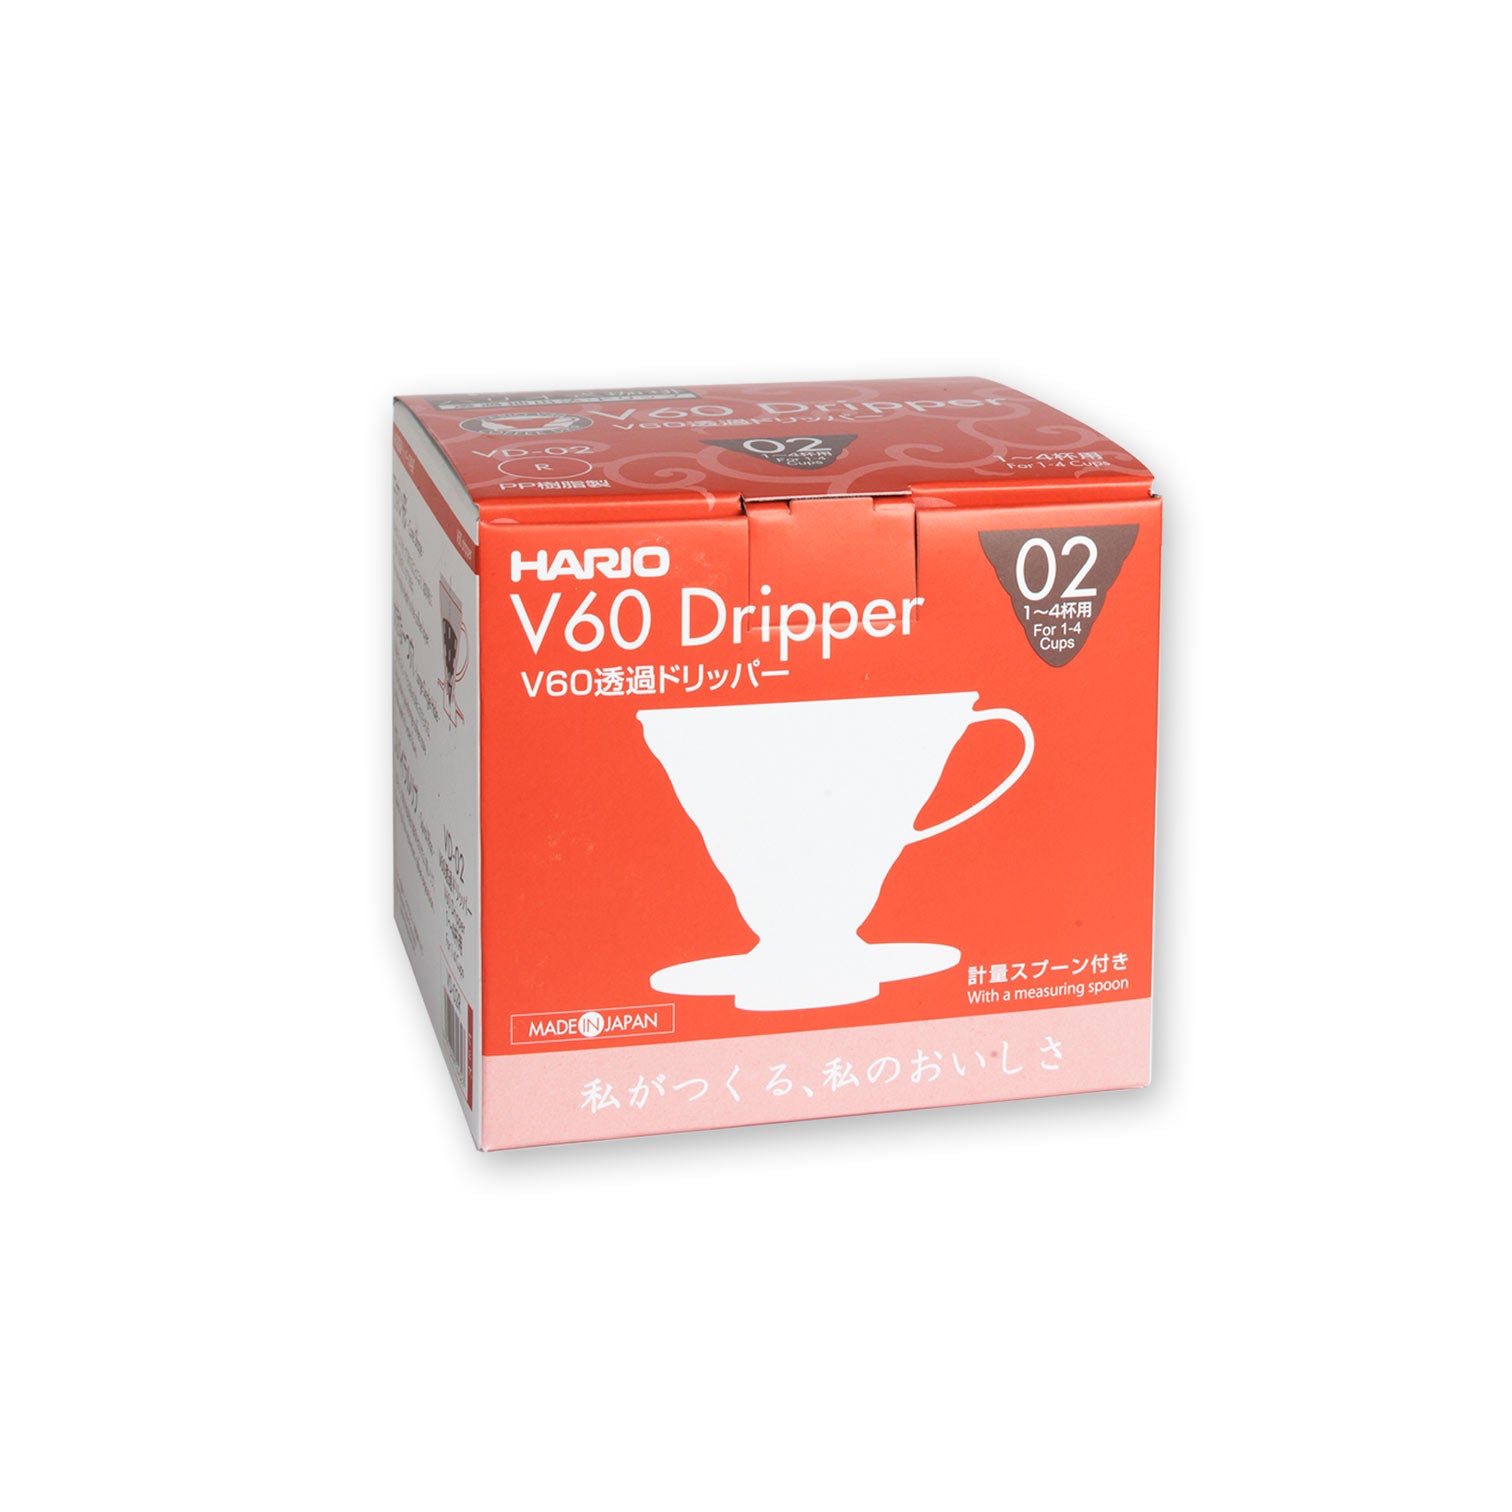 Hario Kaffee Dripper V60-02 - THE SUNNYSIDE